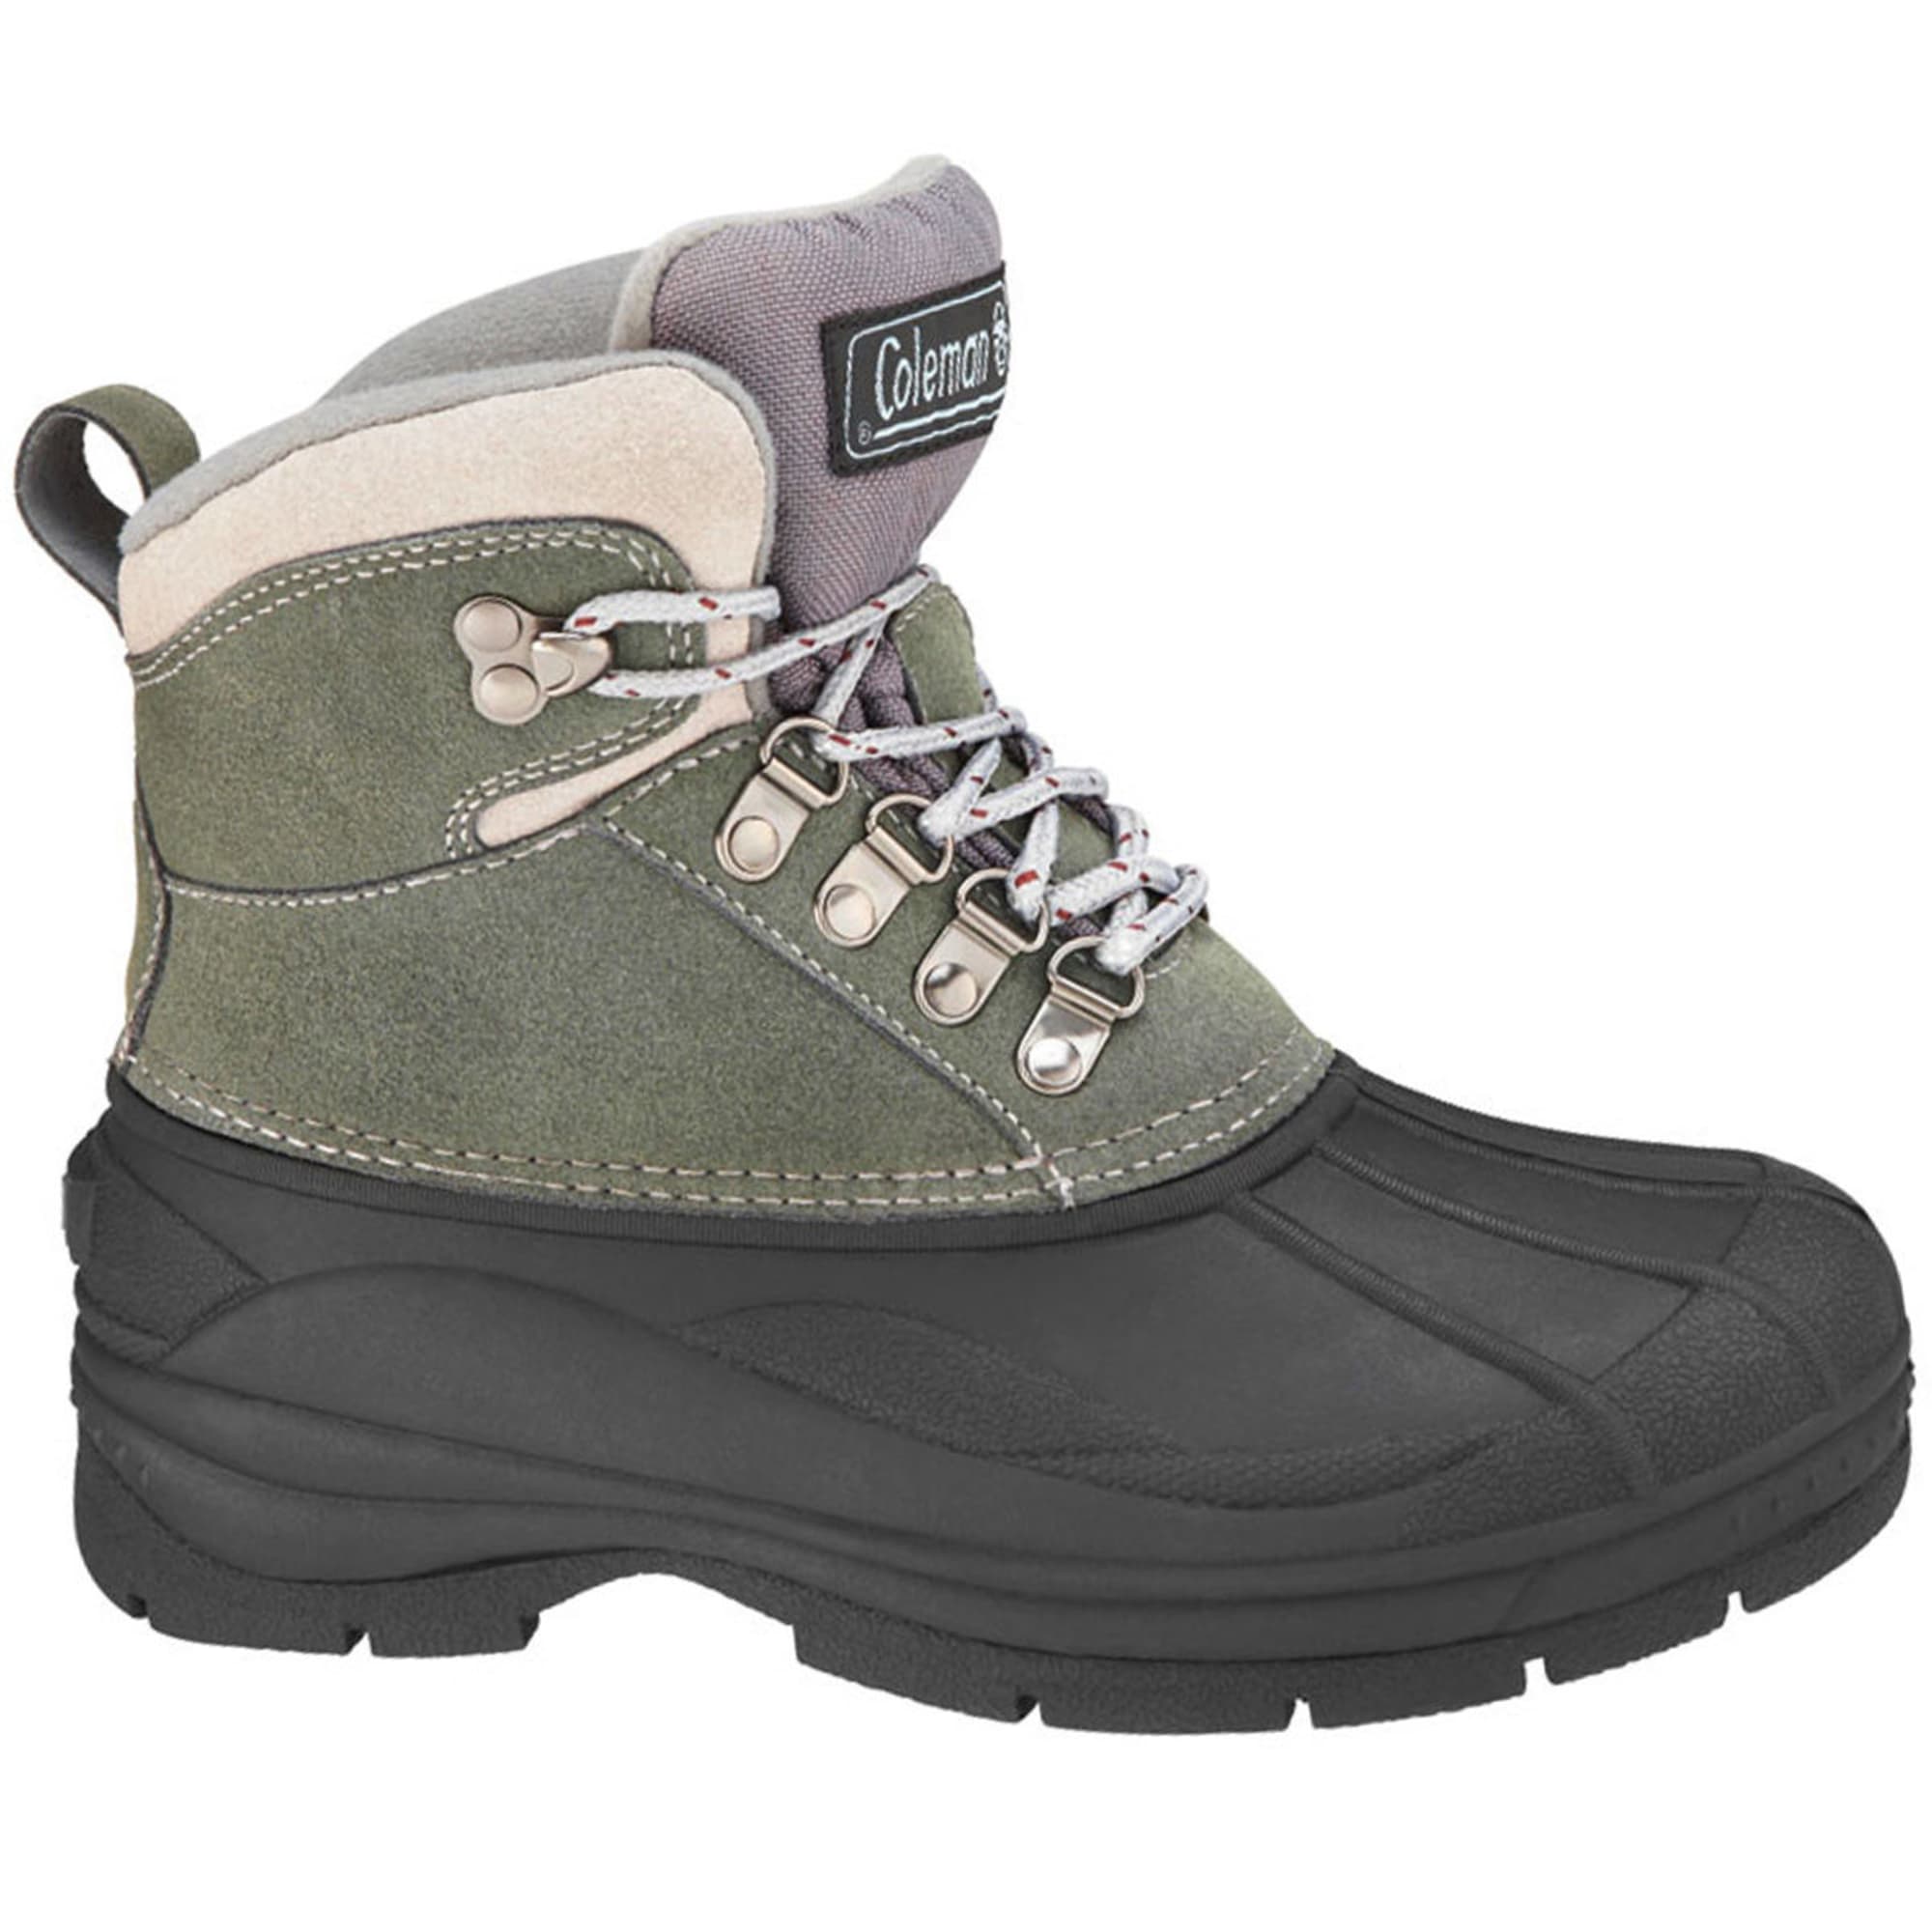 coleman women's hiking boots